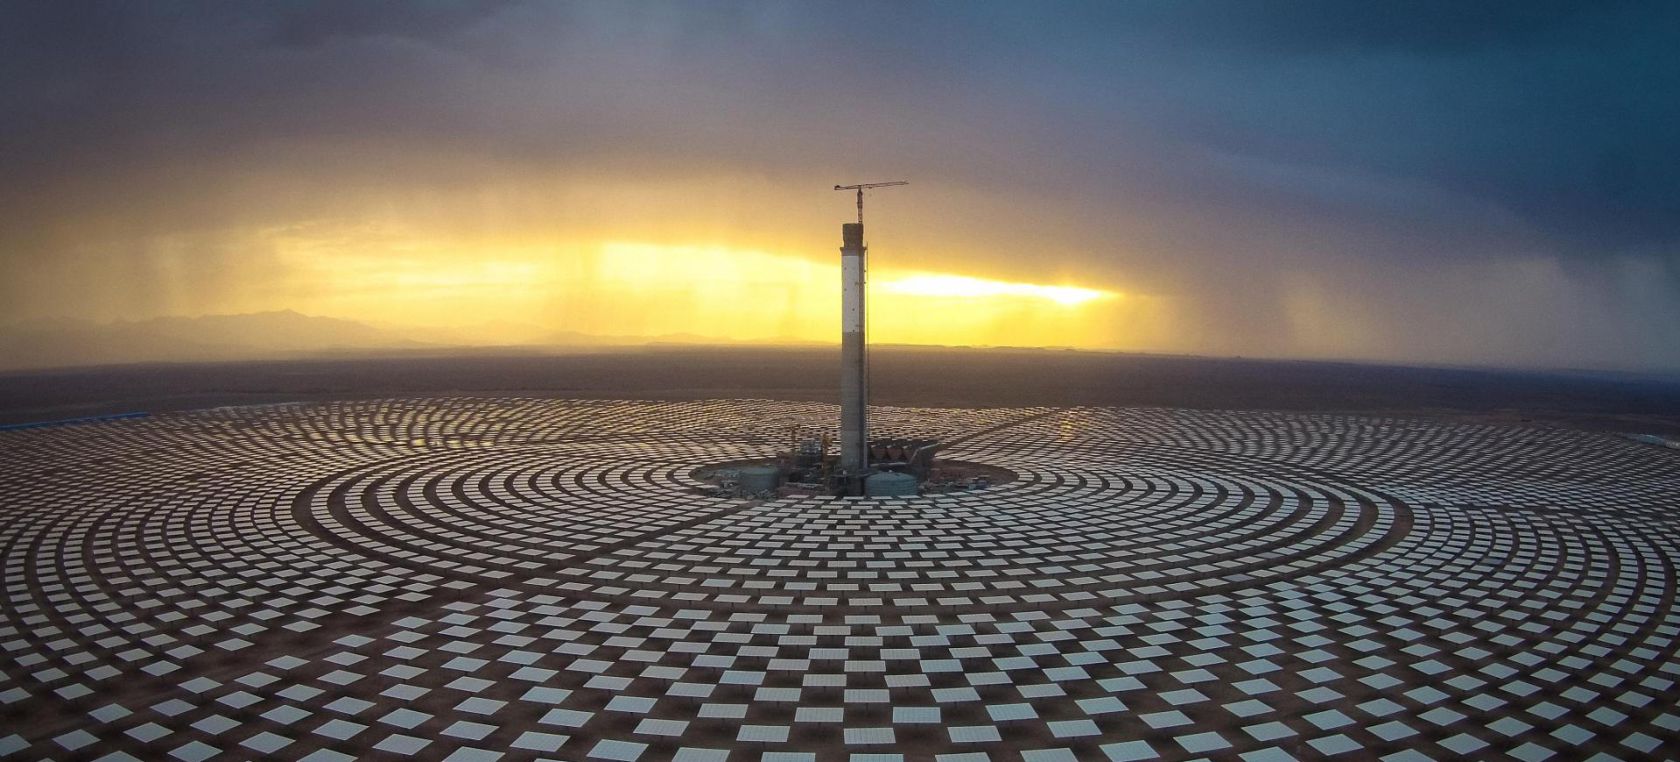 La planta solar de Uarzazate, en Marruecos.